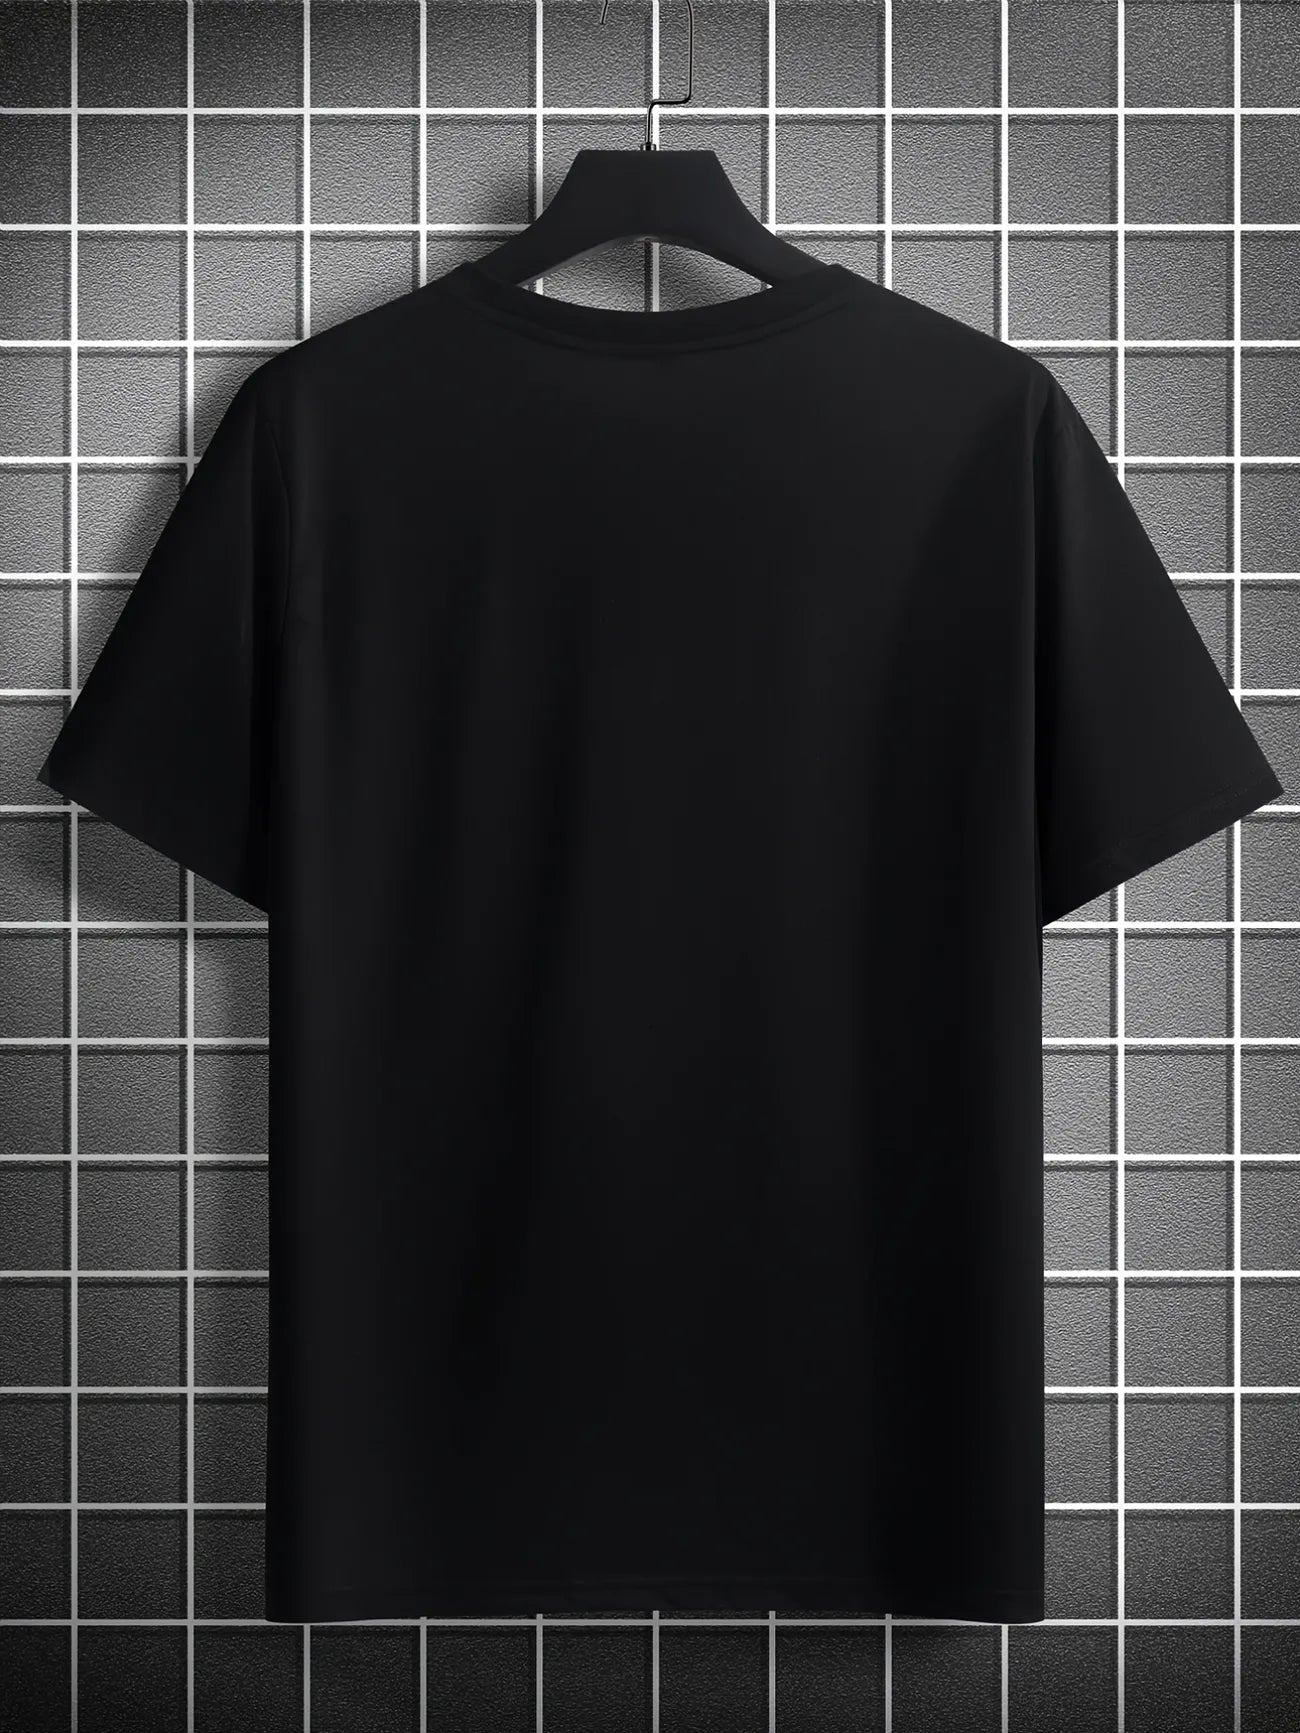 Mens Cotton Sticker Printed T-Shirt TTMPS98 - Black